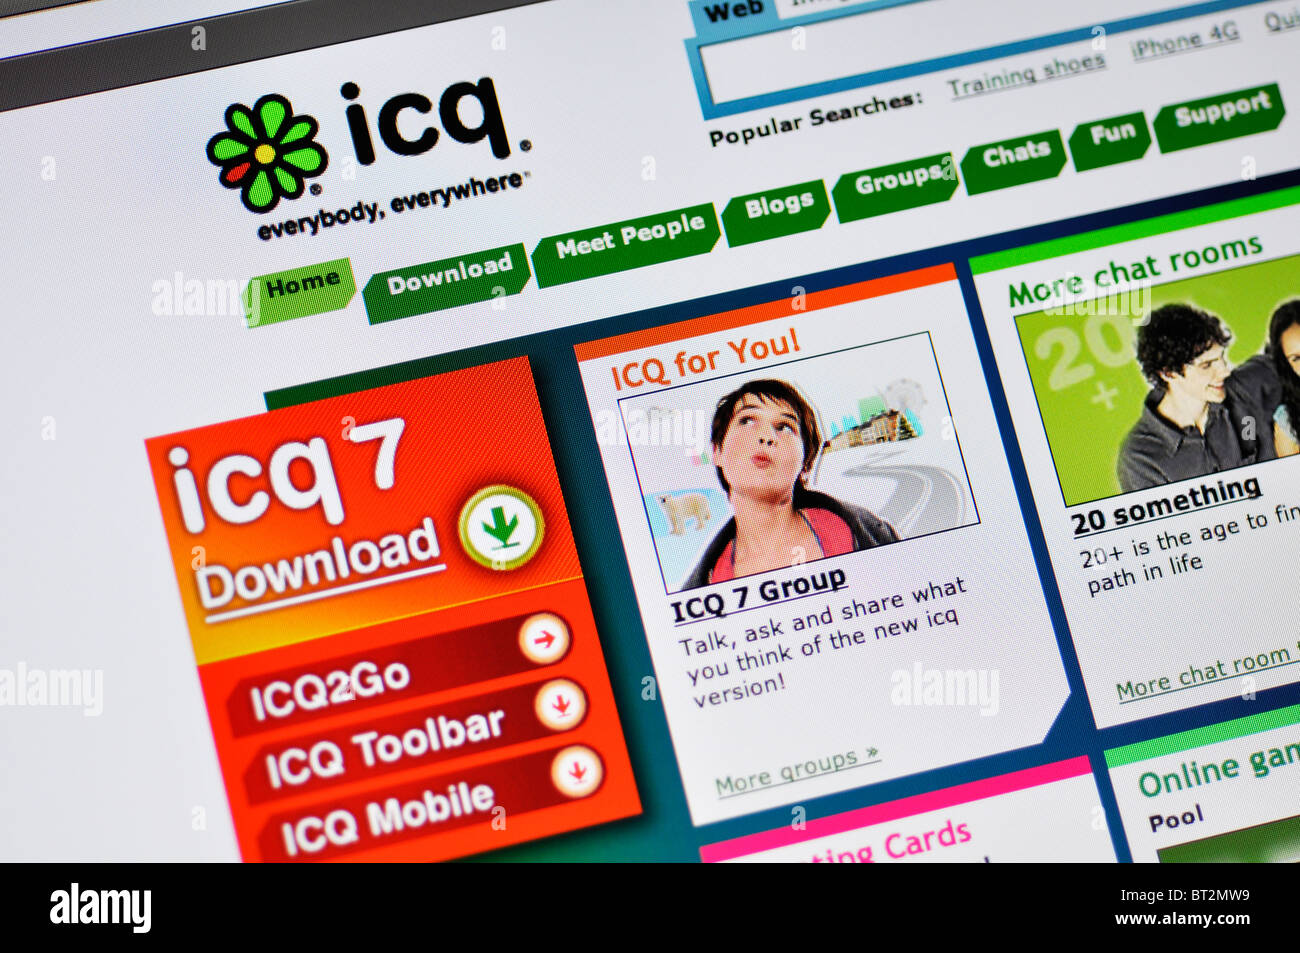 ICQ - Download